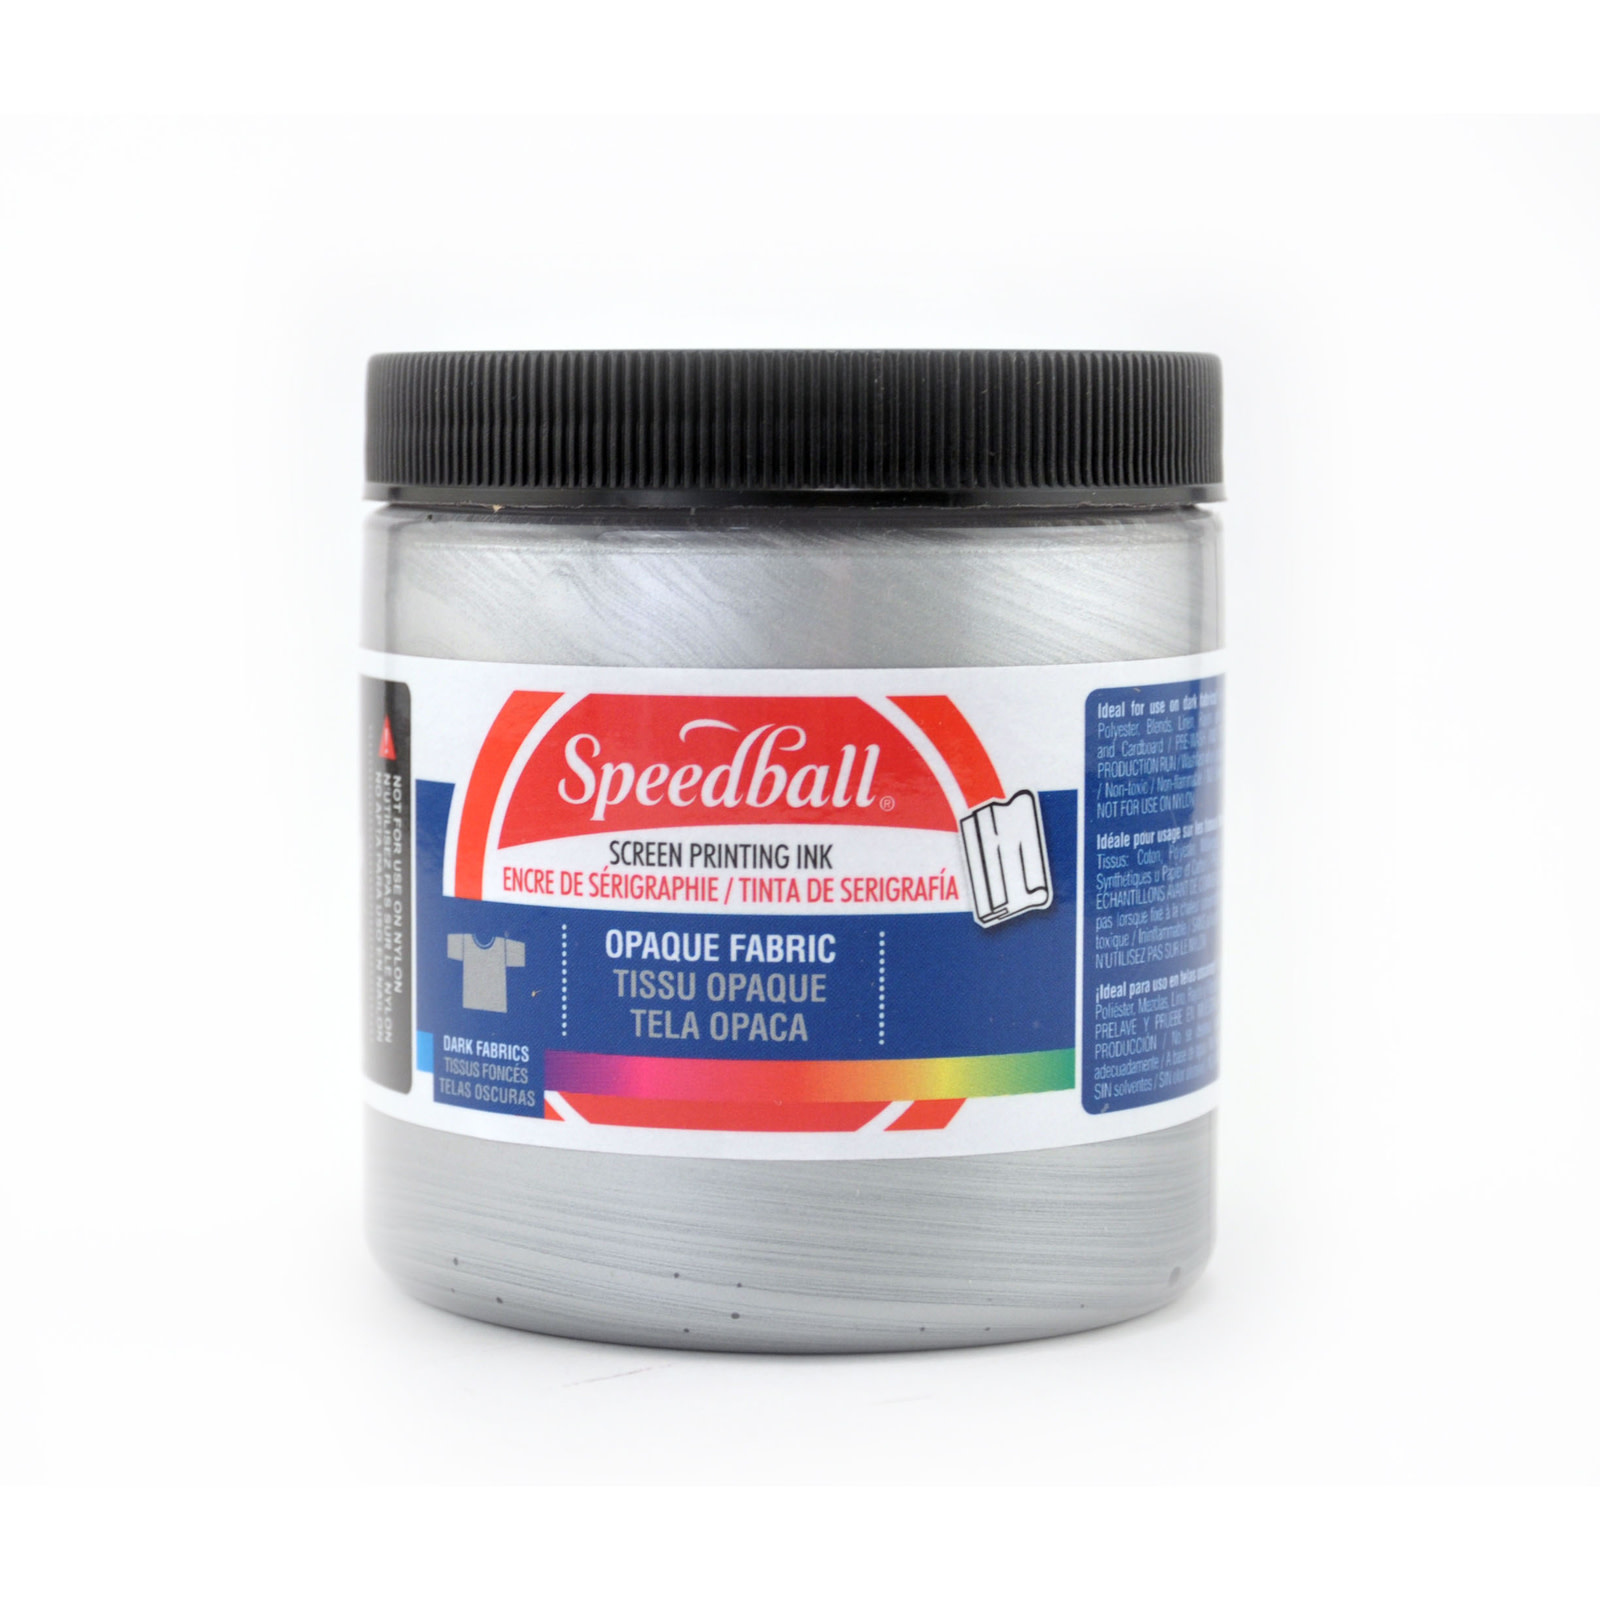 Speedball Opaque Fabric Screen Printing Ink, 8 oz. Jars, Silver